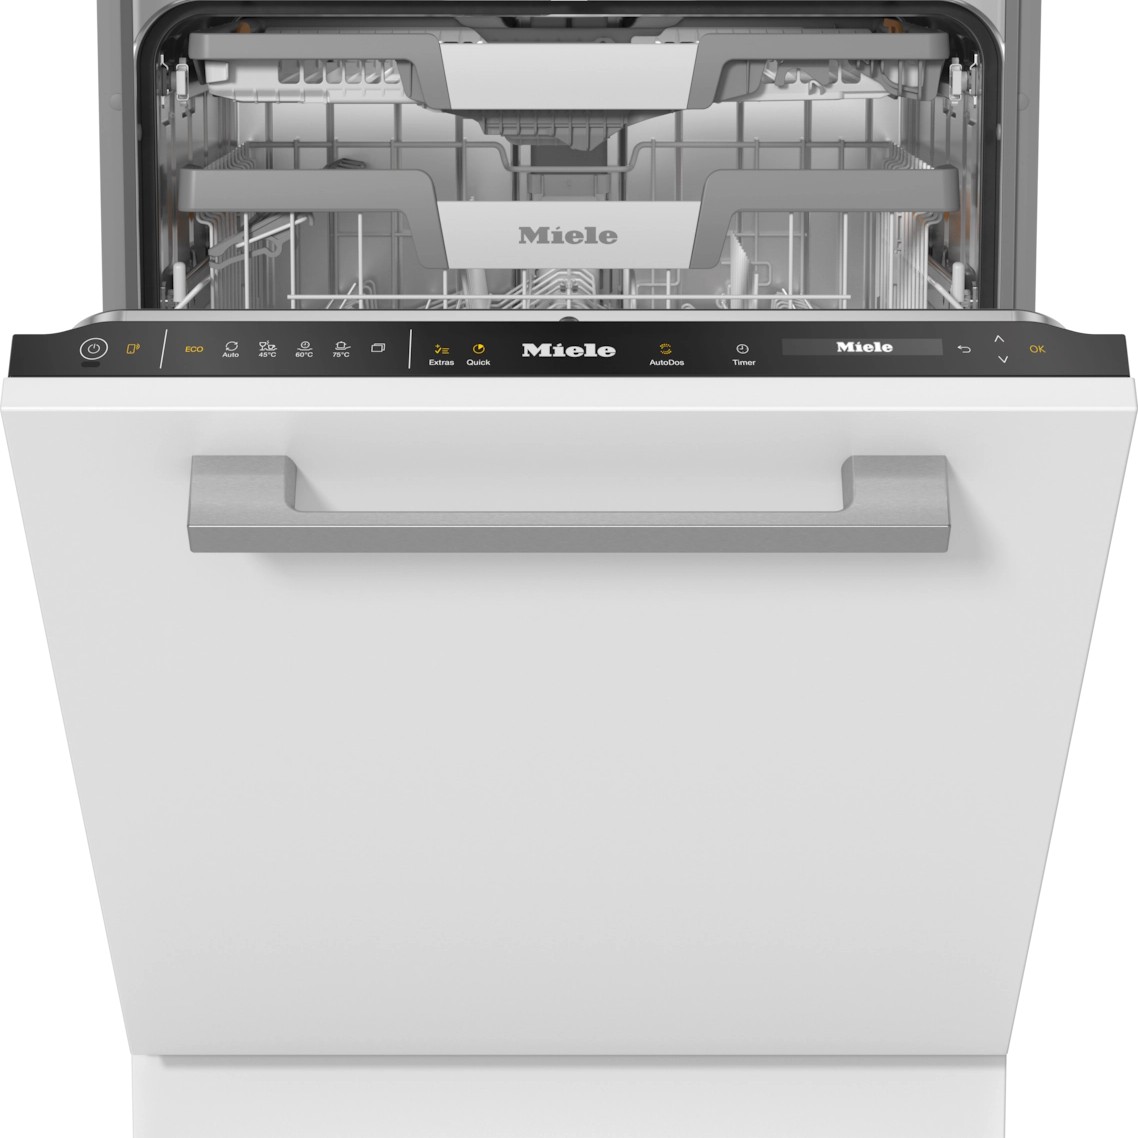 Встраиваемая посудомоечная машина Miele G 7650 SCVi встраиваемая посудомоечная машина miele g5050 scvi active